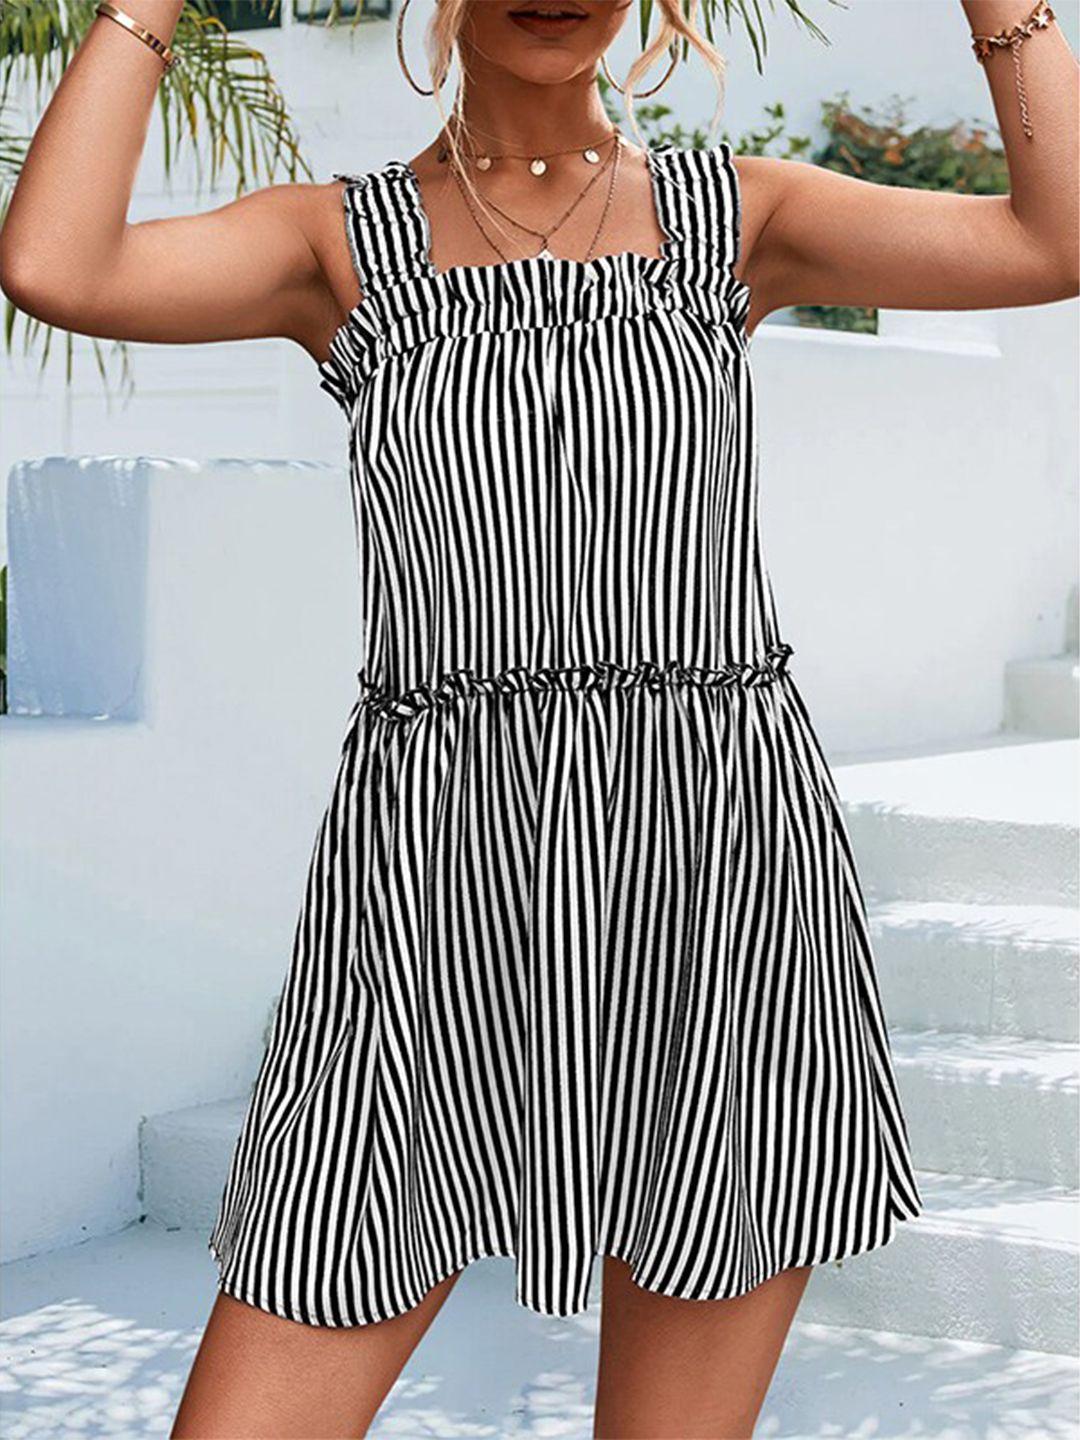 stylecast striped ruffled a-line dress